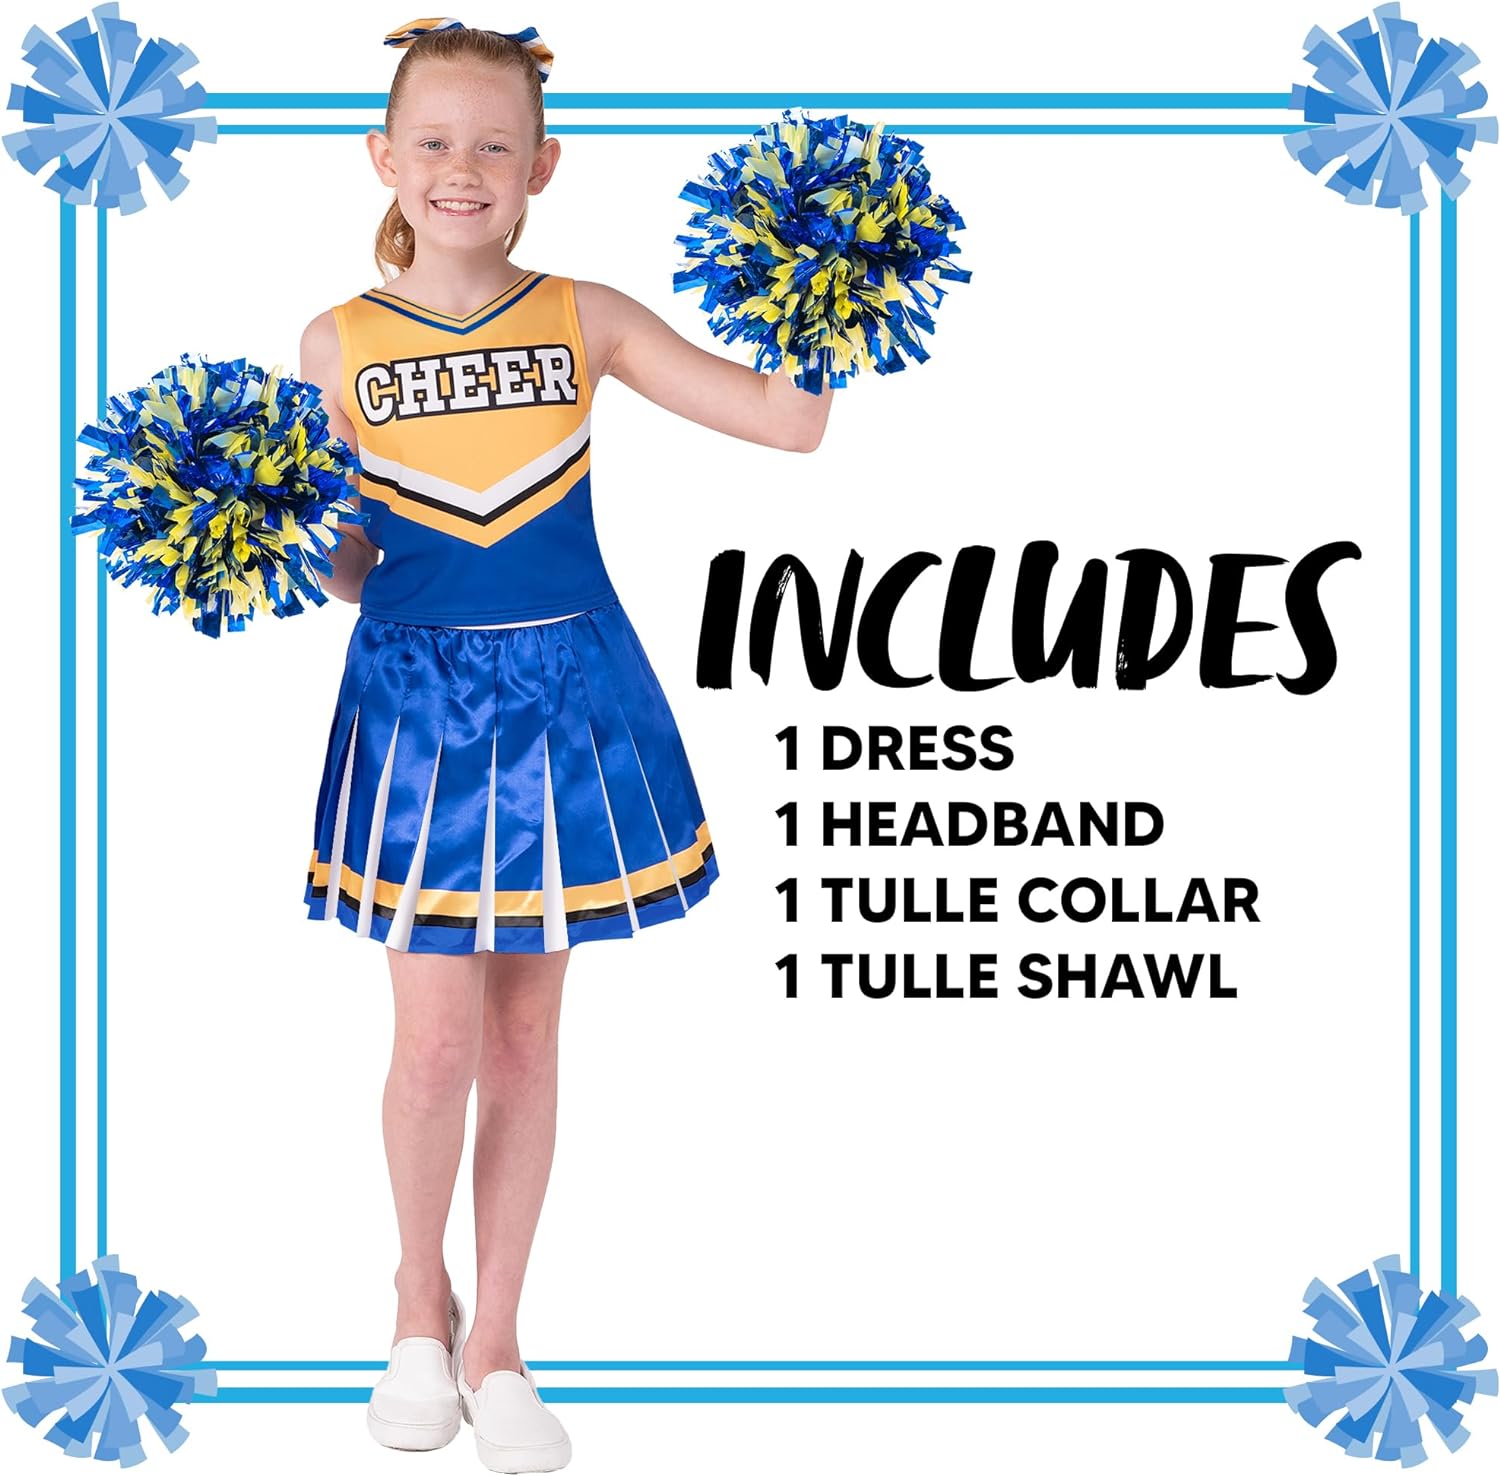 Spooktacular Creations Girl Blue Cheerleader Costume, Halloween Cute Cheer Uniform Outfit with Accessories for Halloween High School Cheerleader Dress Up Costume-XL